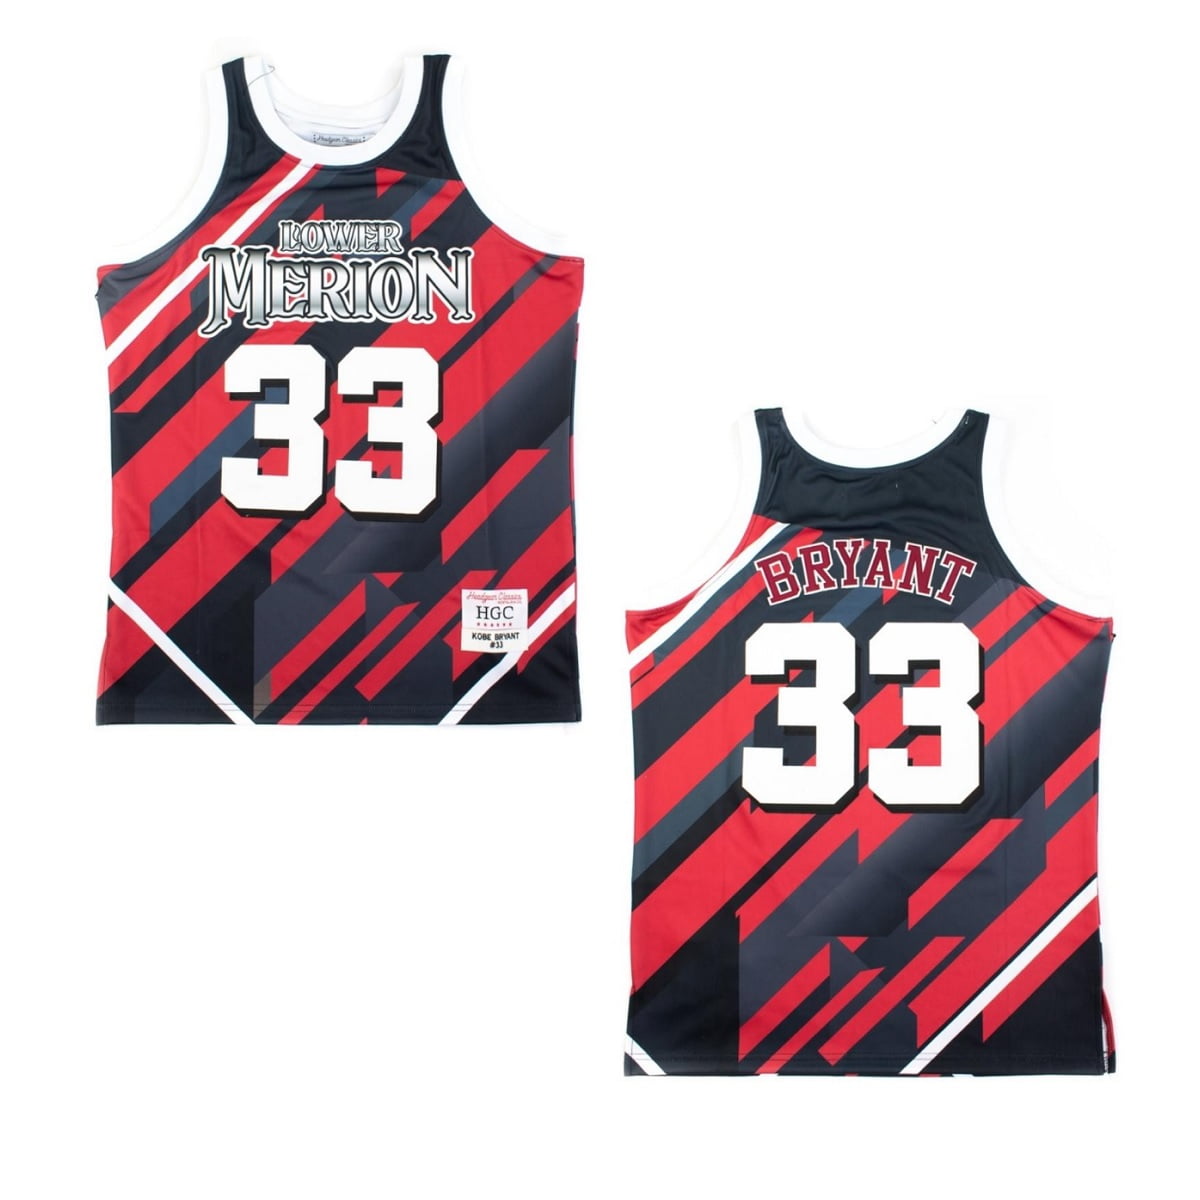 on sale- Kobe Bryant 33 Lower Merion High School Throwback Basketball Jersey